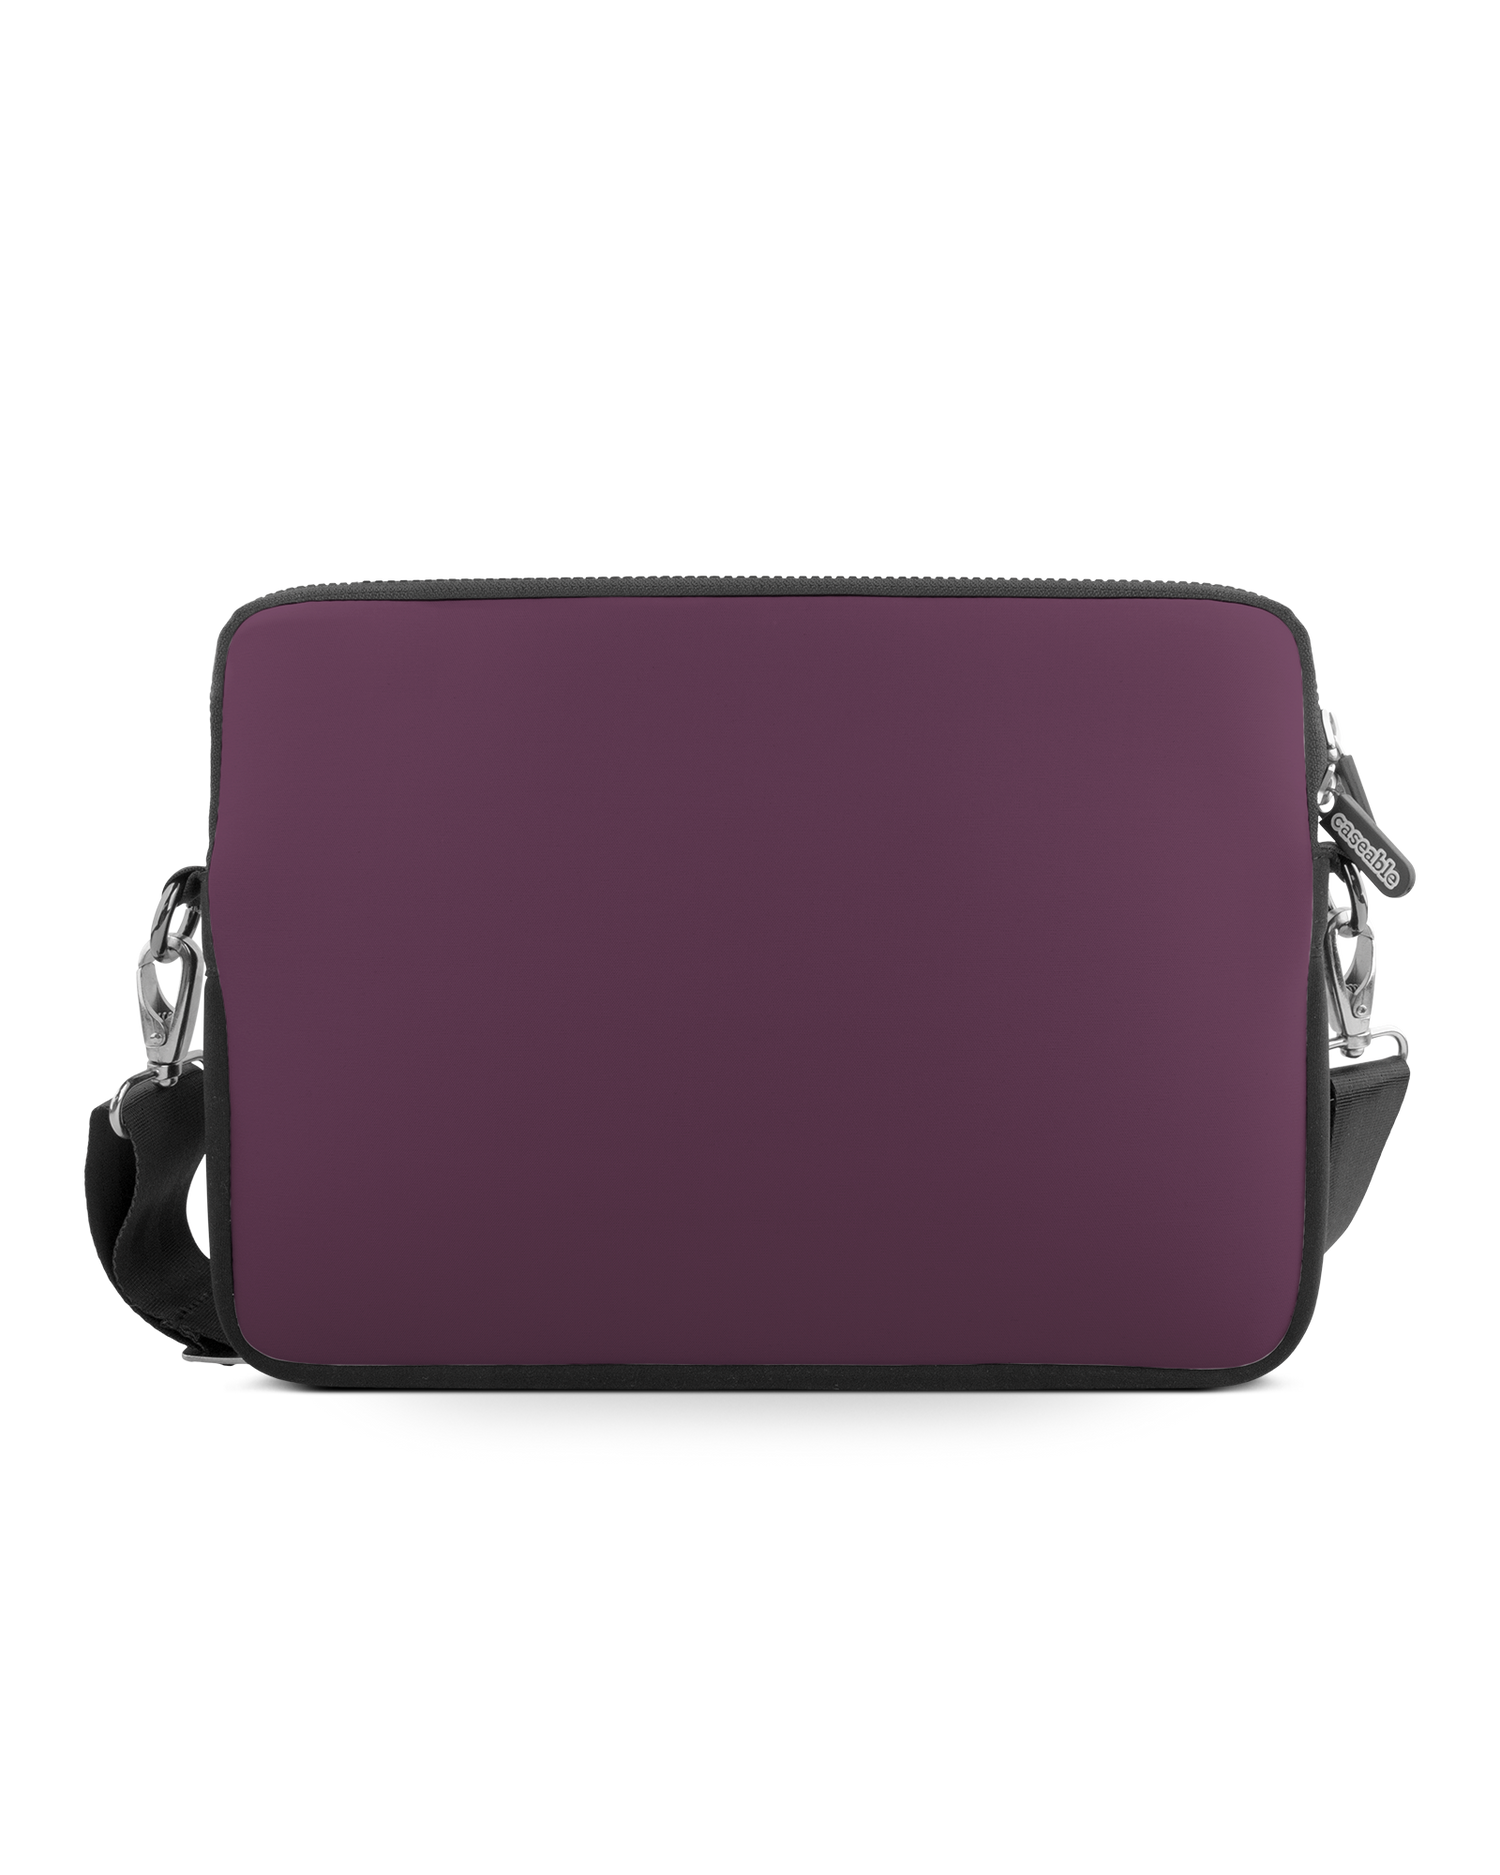 PLUM Premium Laptop Bag 13 inch: Front View